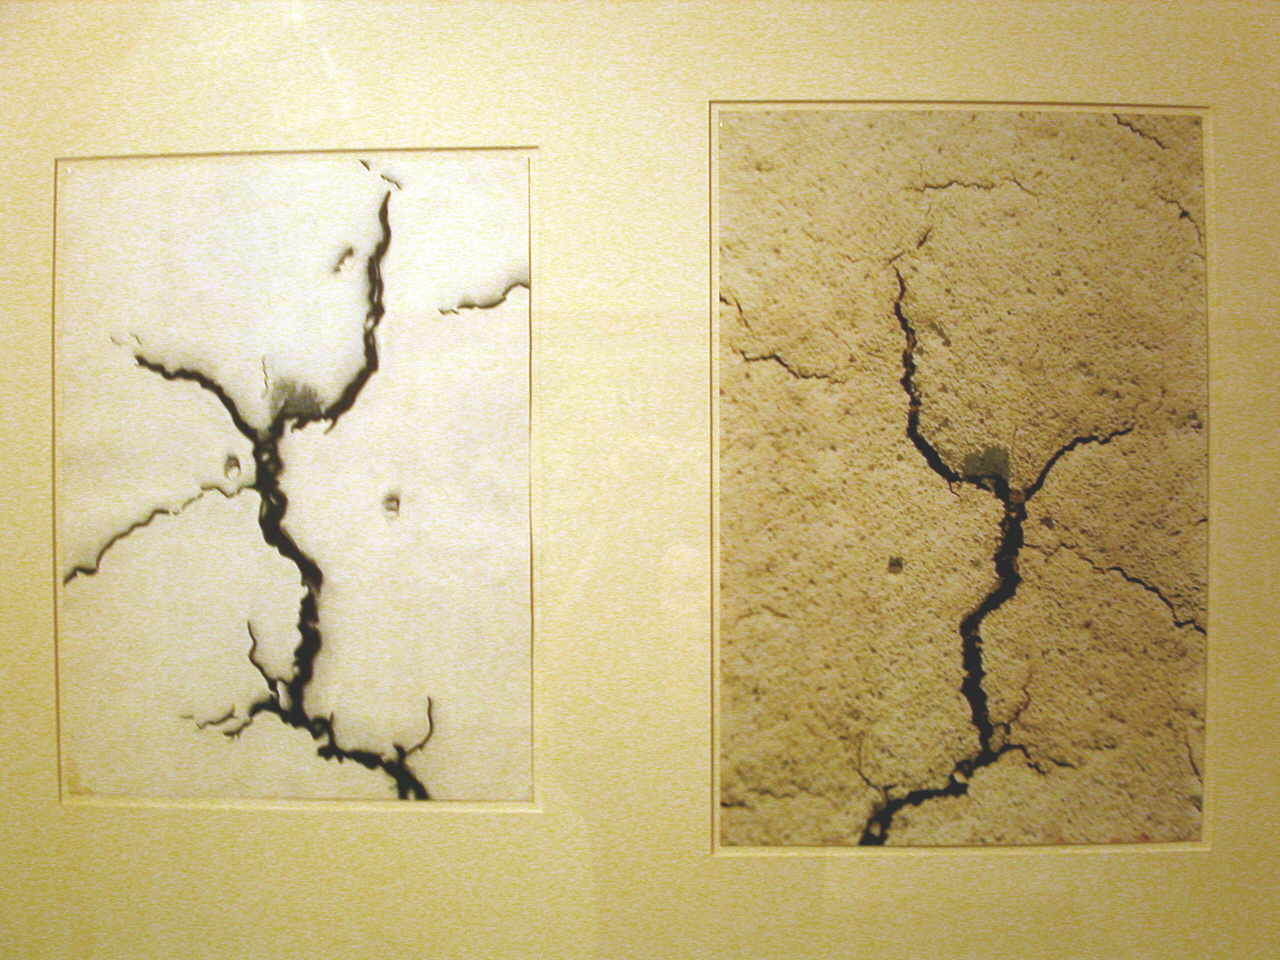 Paulitzky Ana 
untitled, 1985
mixed media / paper
70 x 100 cm (2 teilig)